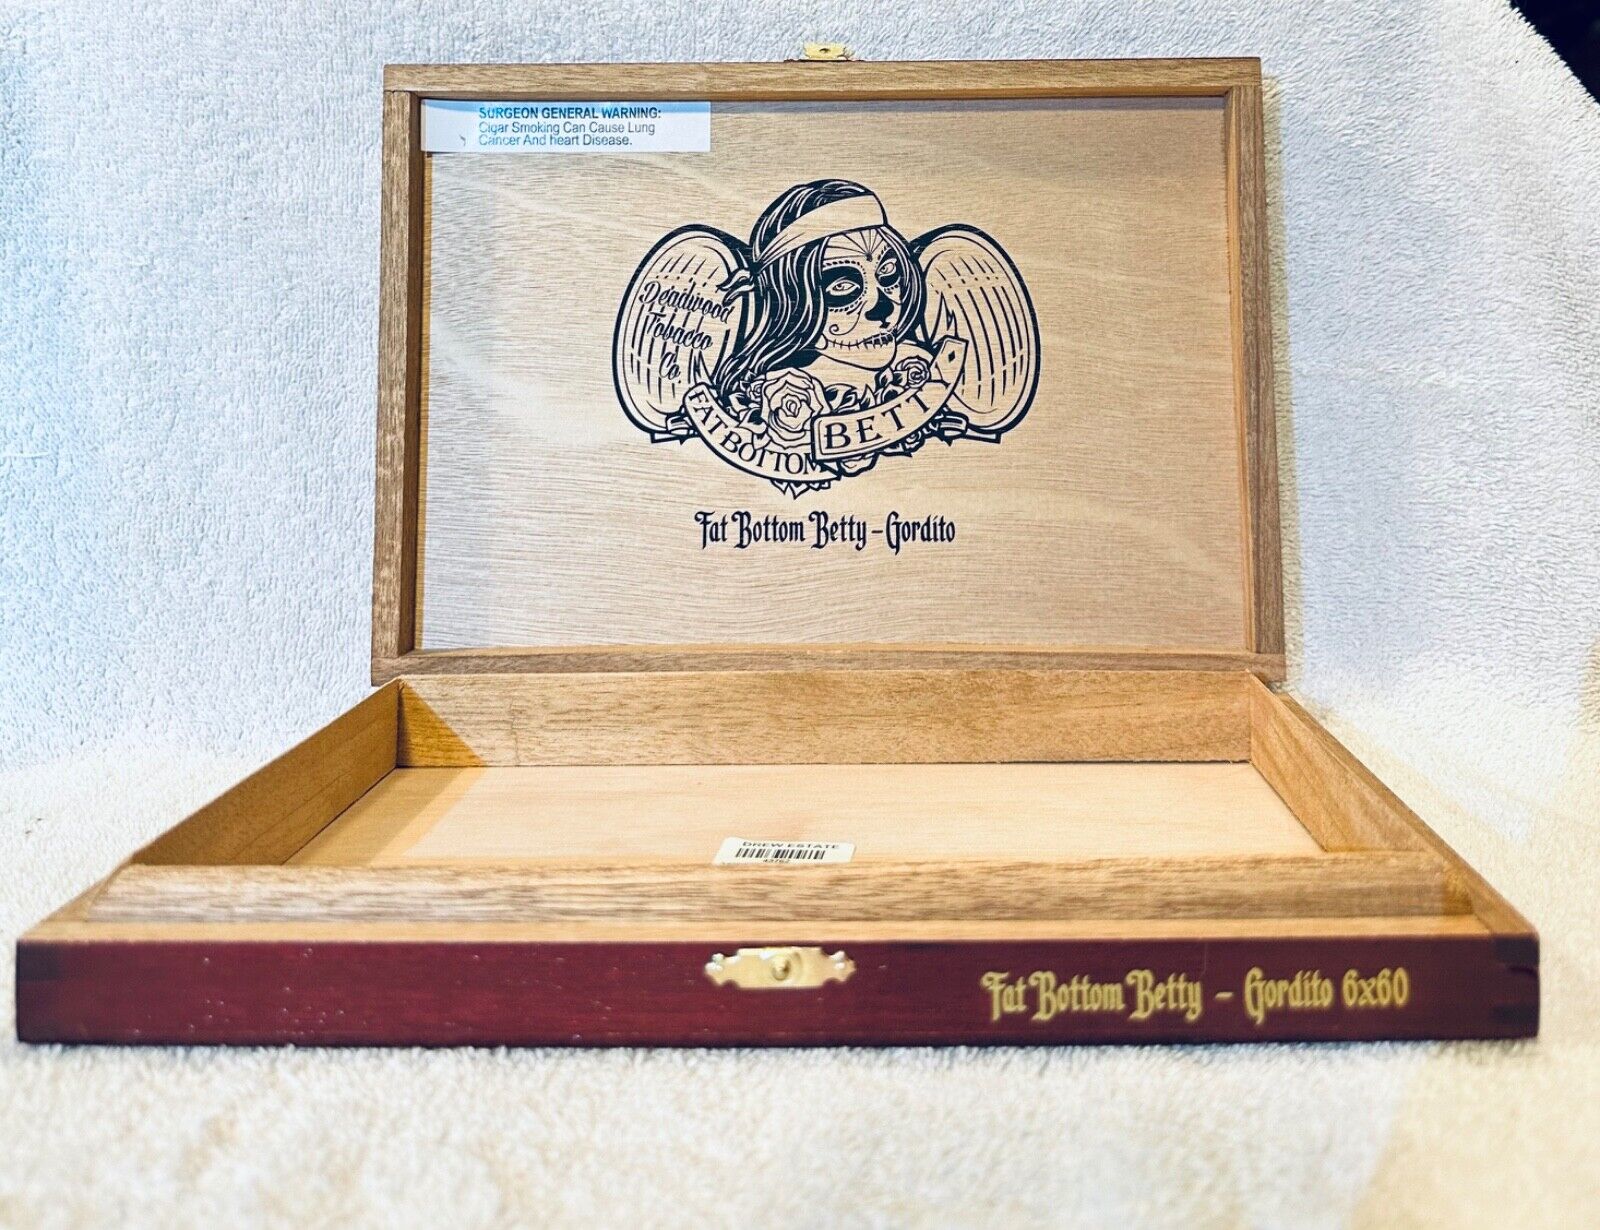 Vintage Deadwood Fat Bottom Betty Gorditio Cigar Box